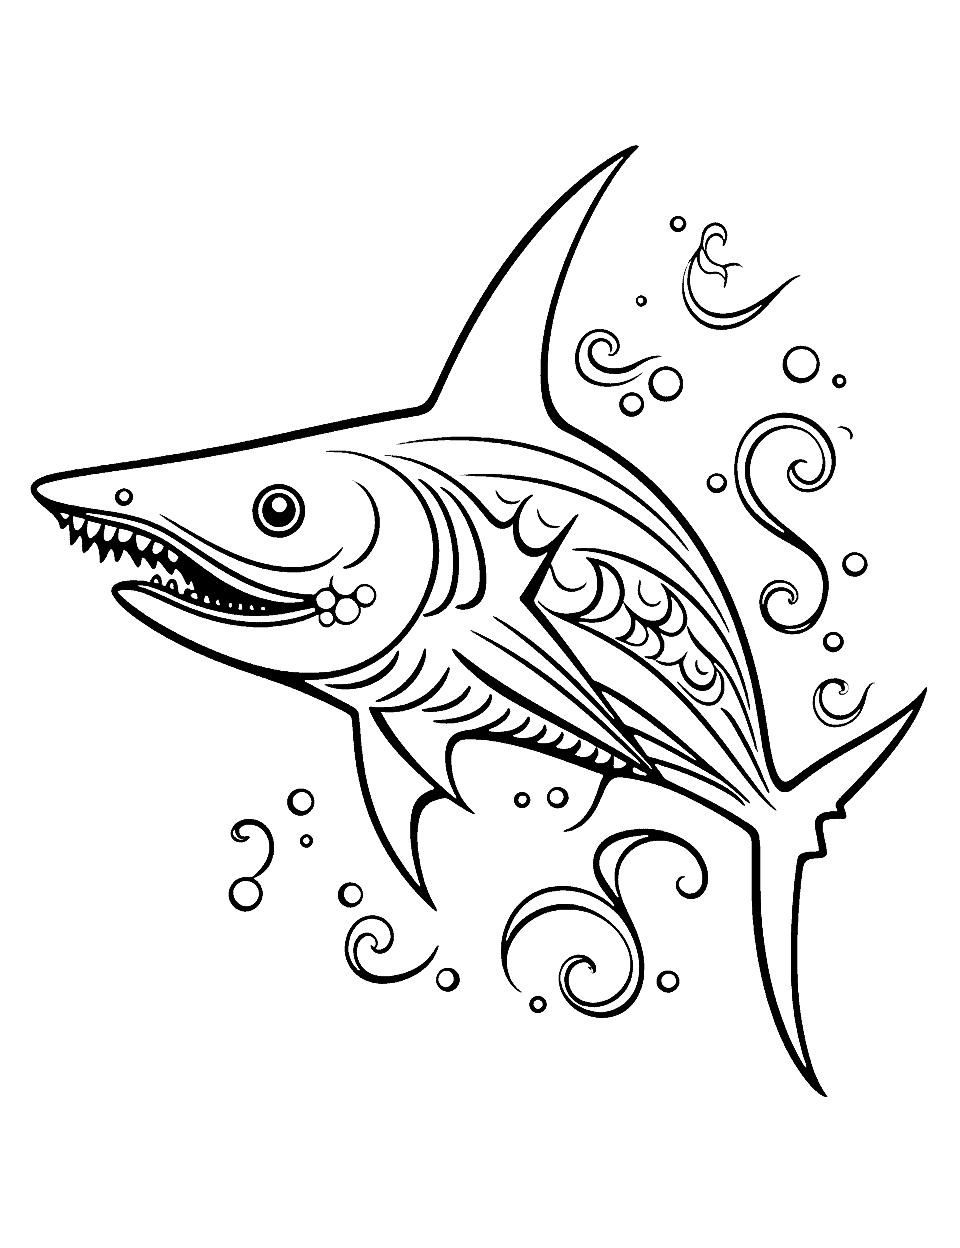 Hybrid Shark-Bird Shark Coloring Page - An imaginary hybrid of a shark and a bird, sparking creativity and imagination.